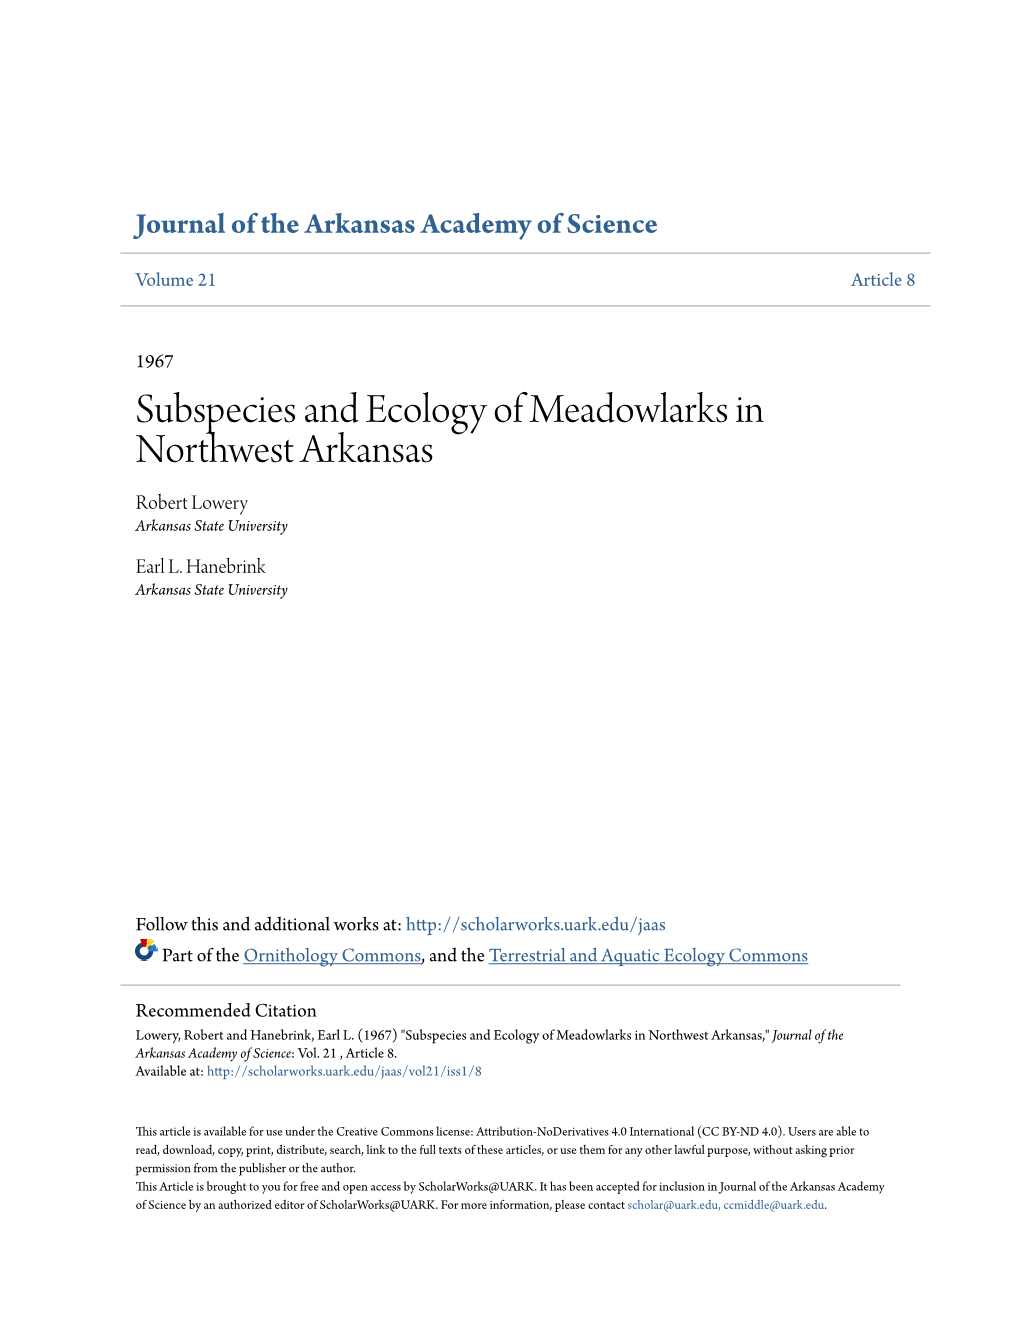 Subspecies and Ecology of Meadowlarks in Northwest Arkansas Robert Lowery Arkansas State University